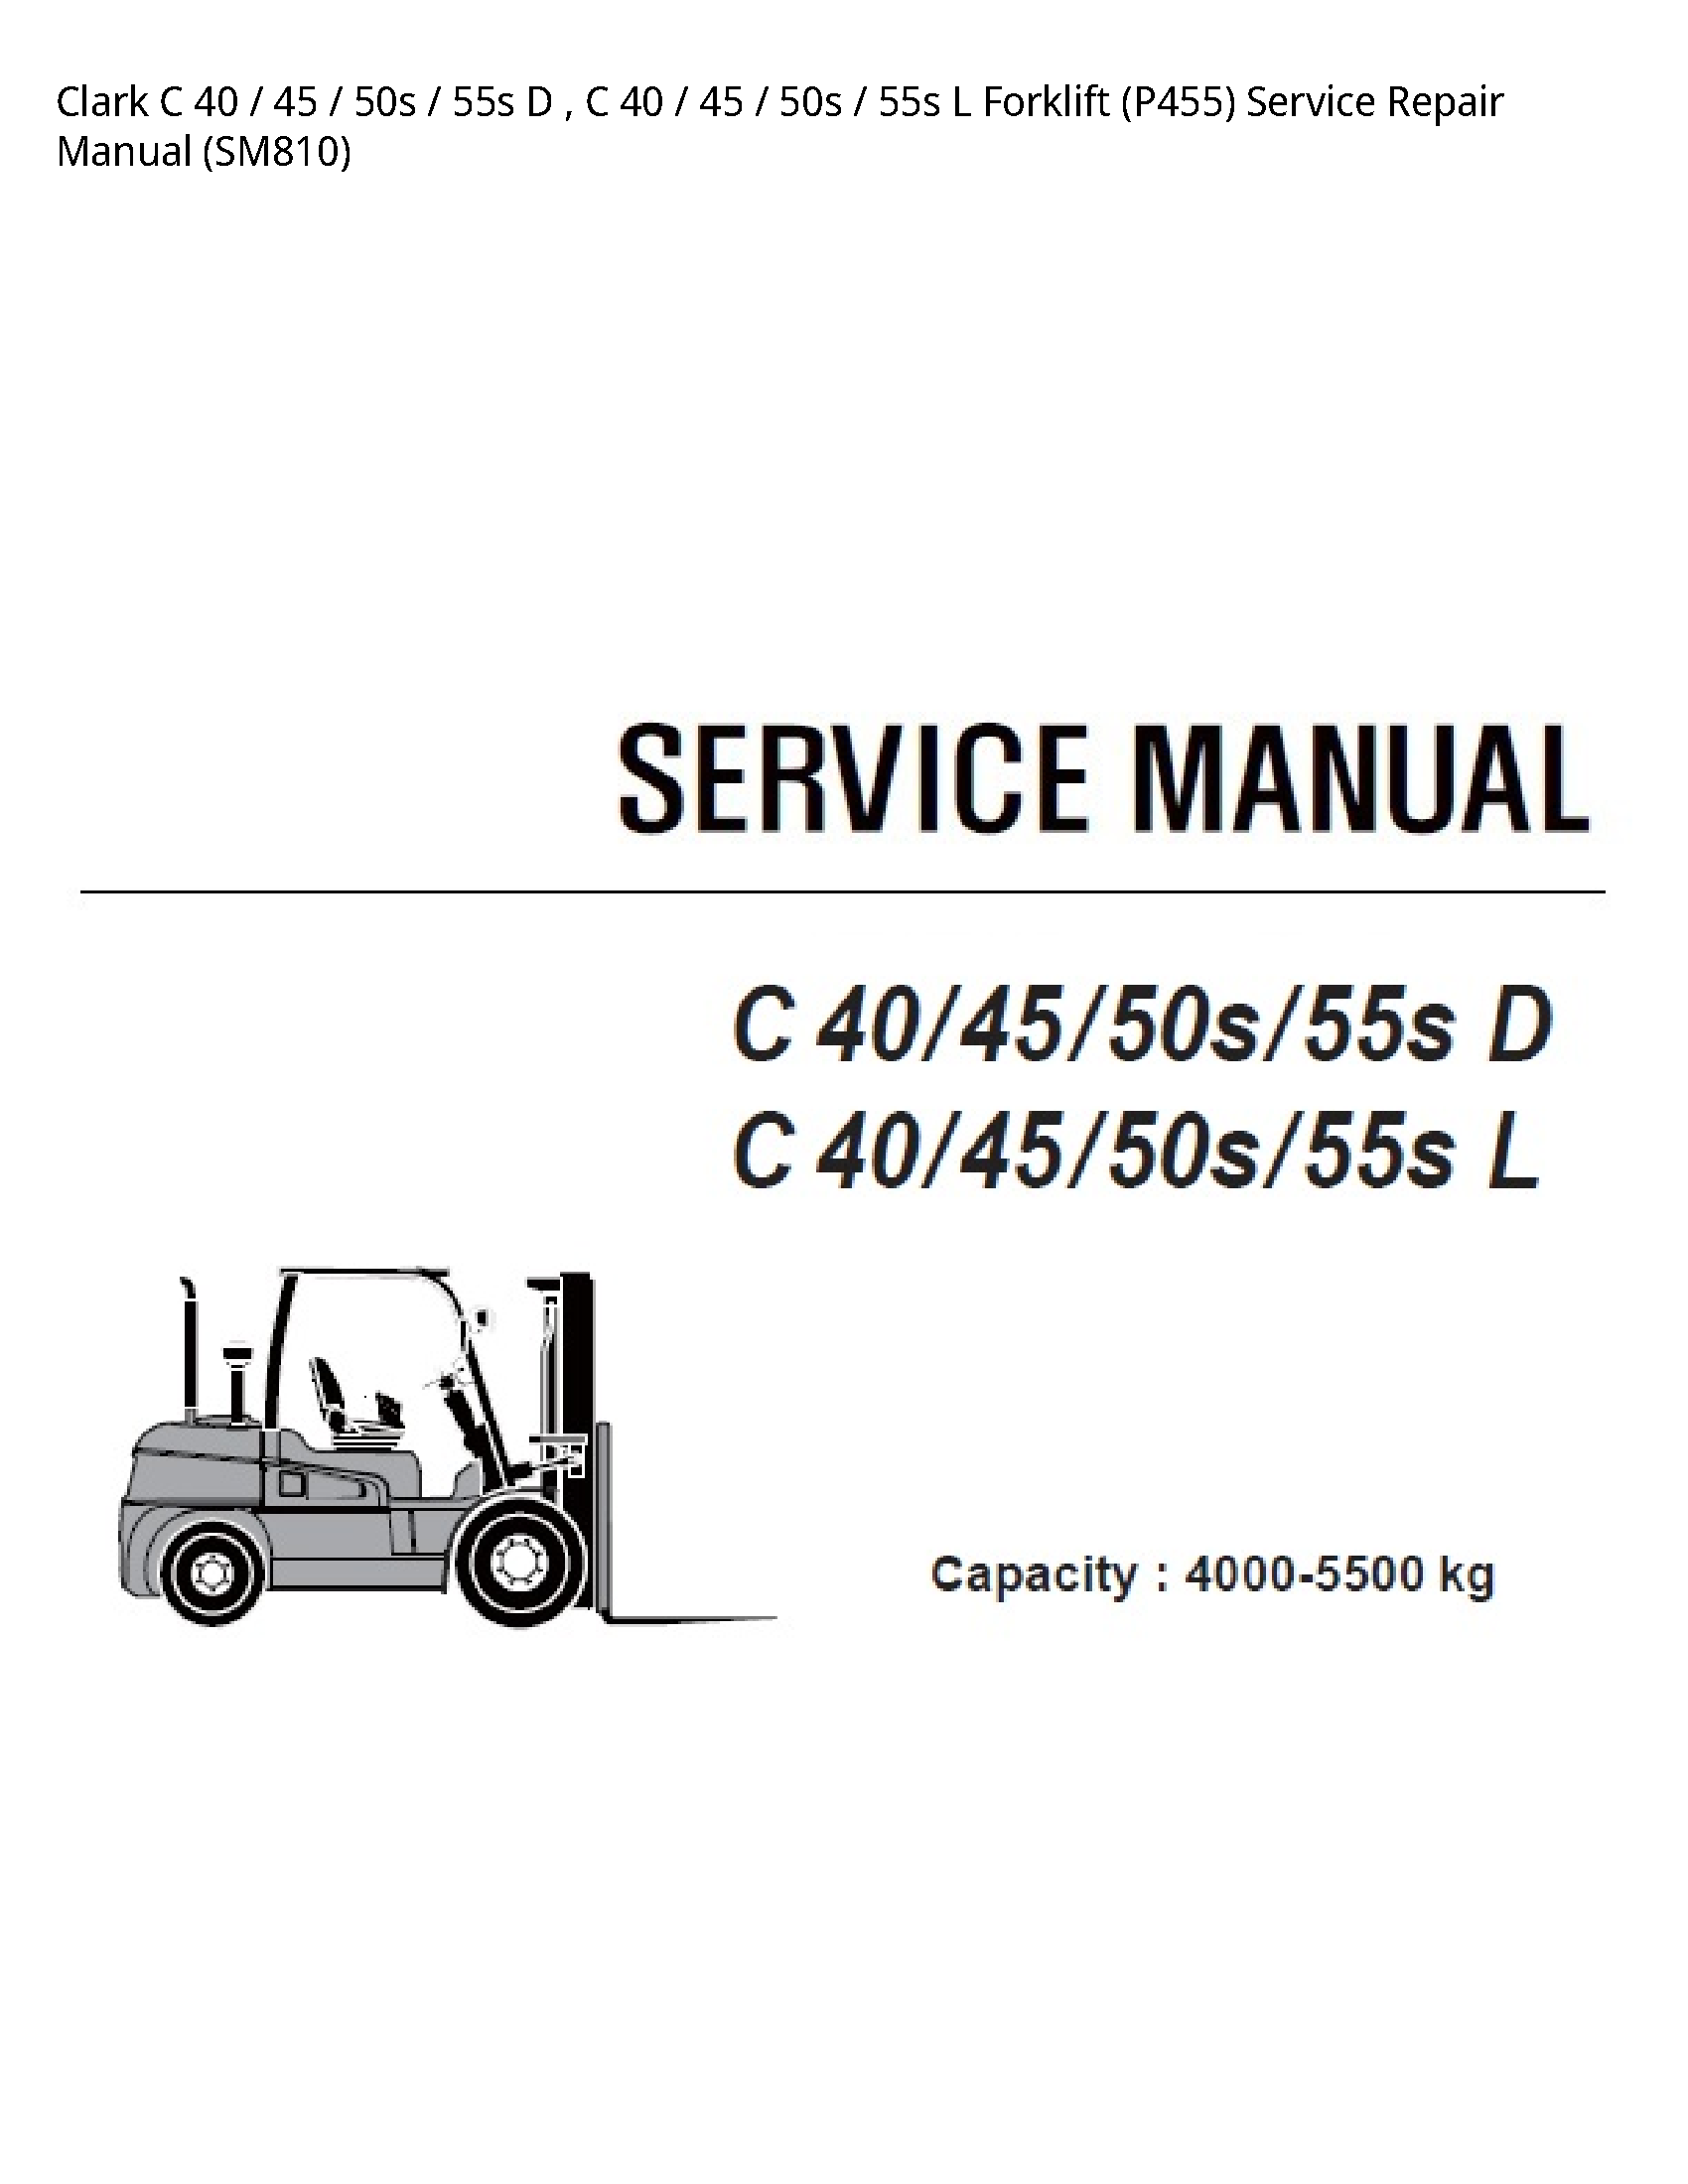 Clark 40 Forklift manual